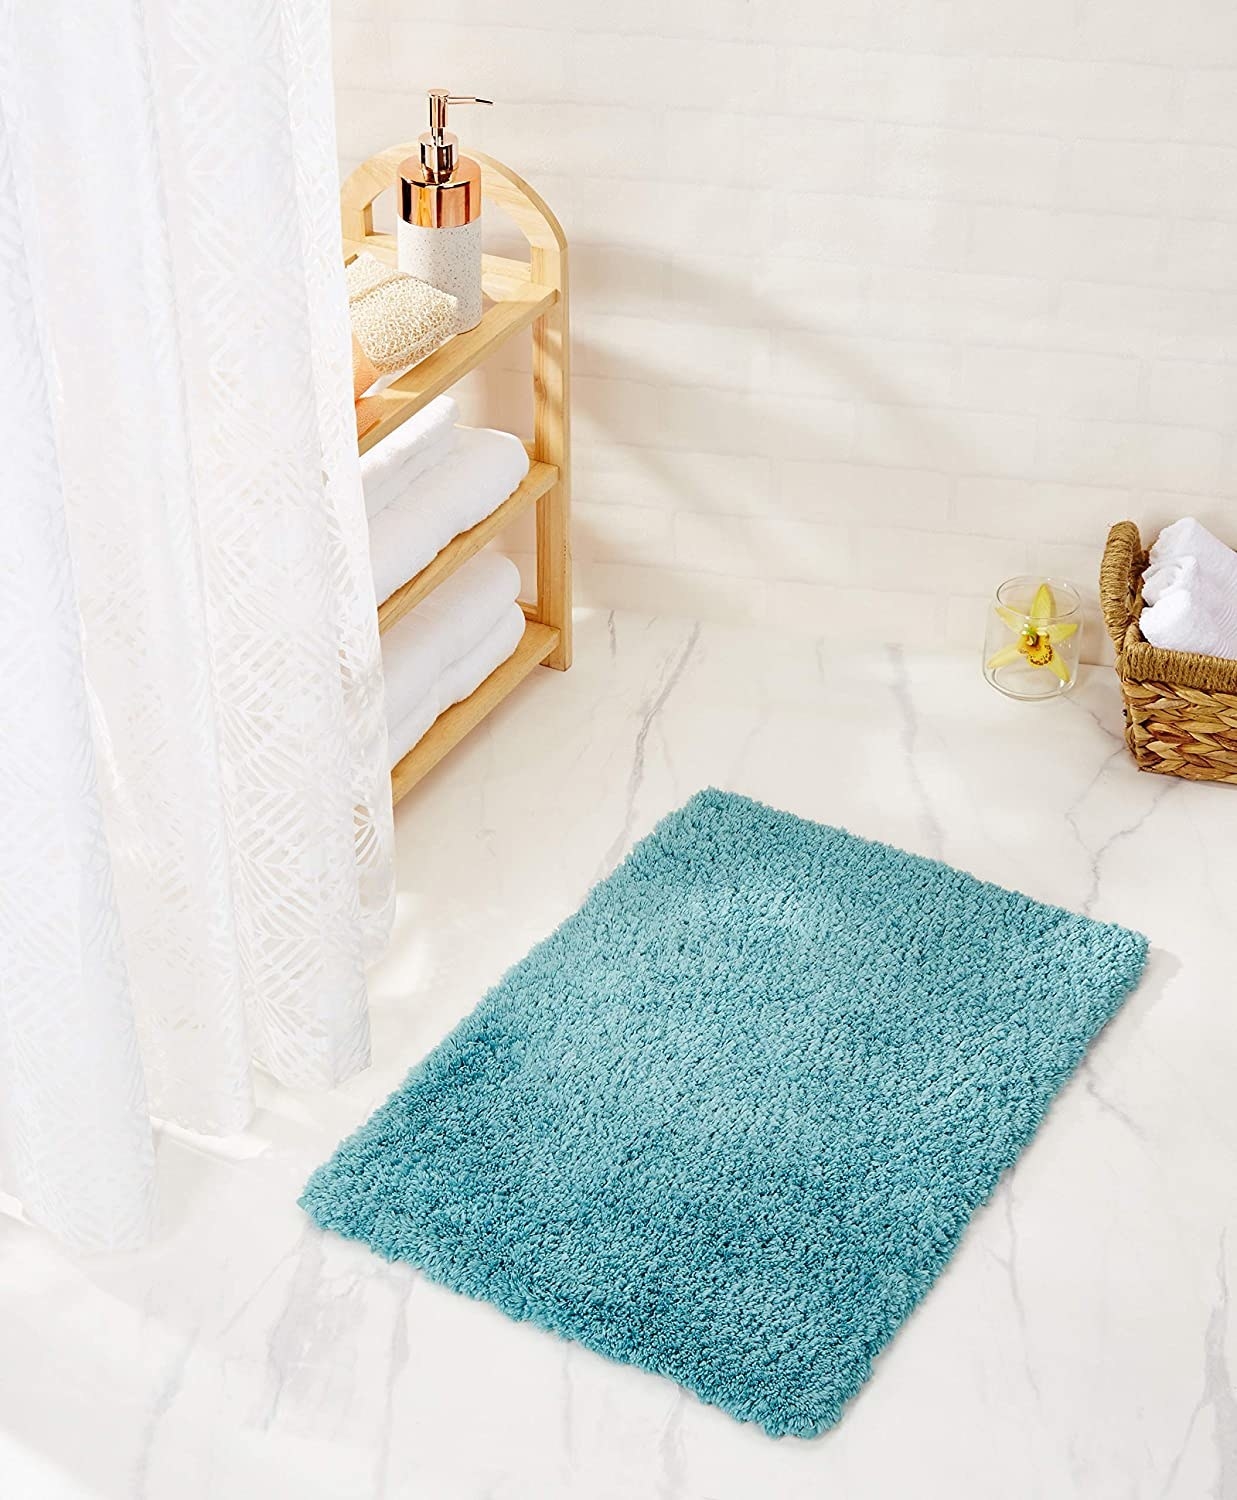 A turquoise bath mat on the floor 